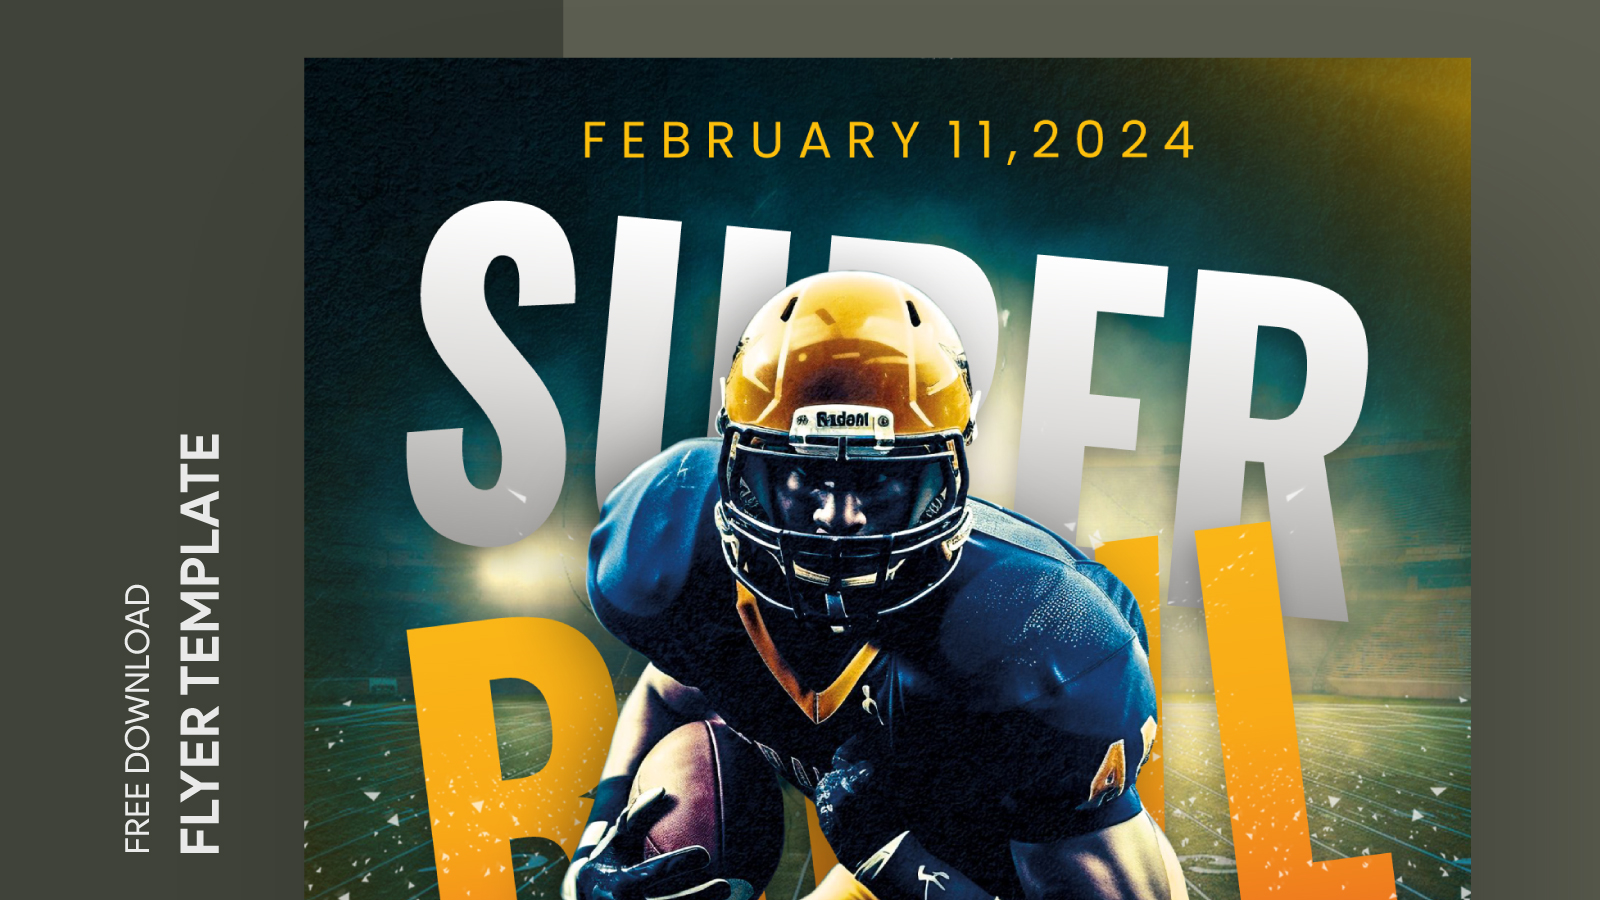 Super Bowl Flyer 2024 Free Google Docs Template gdoc.io